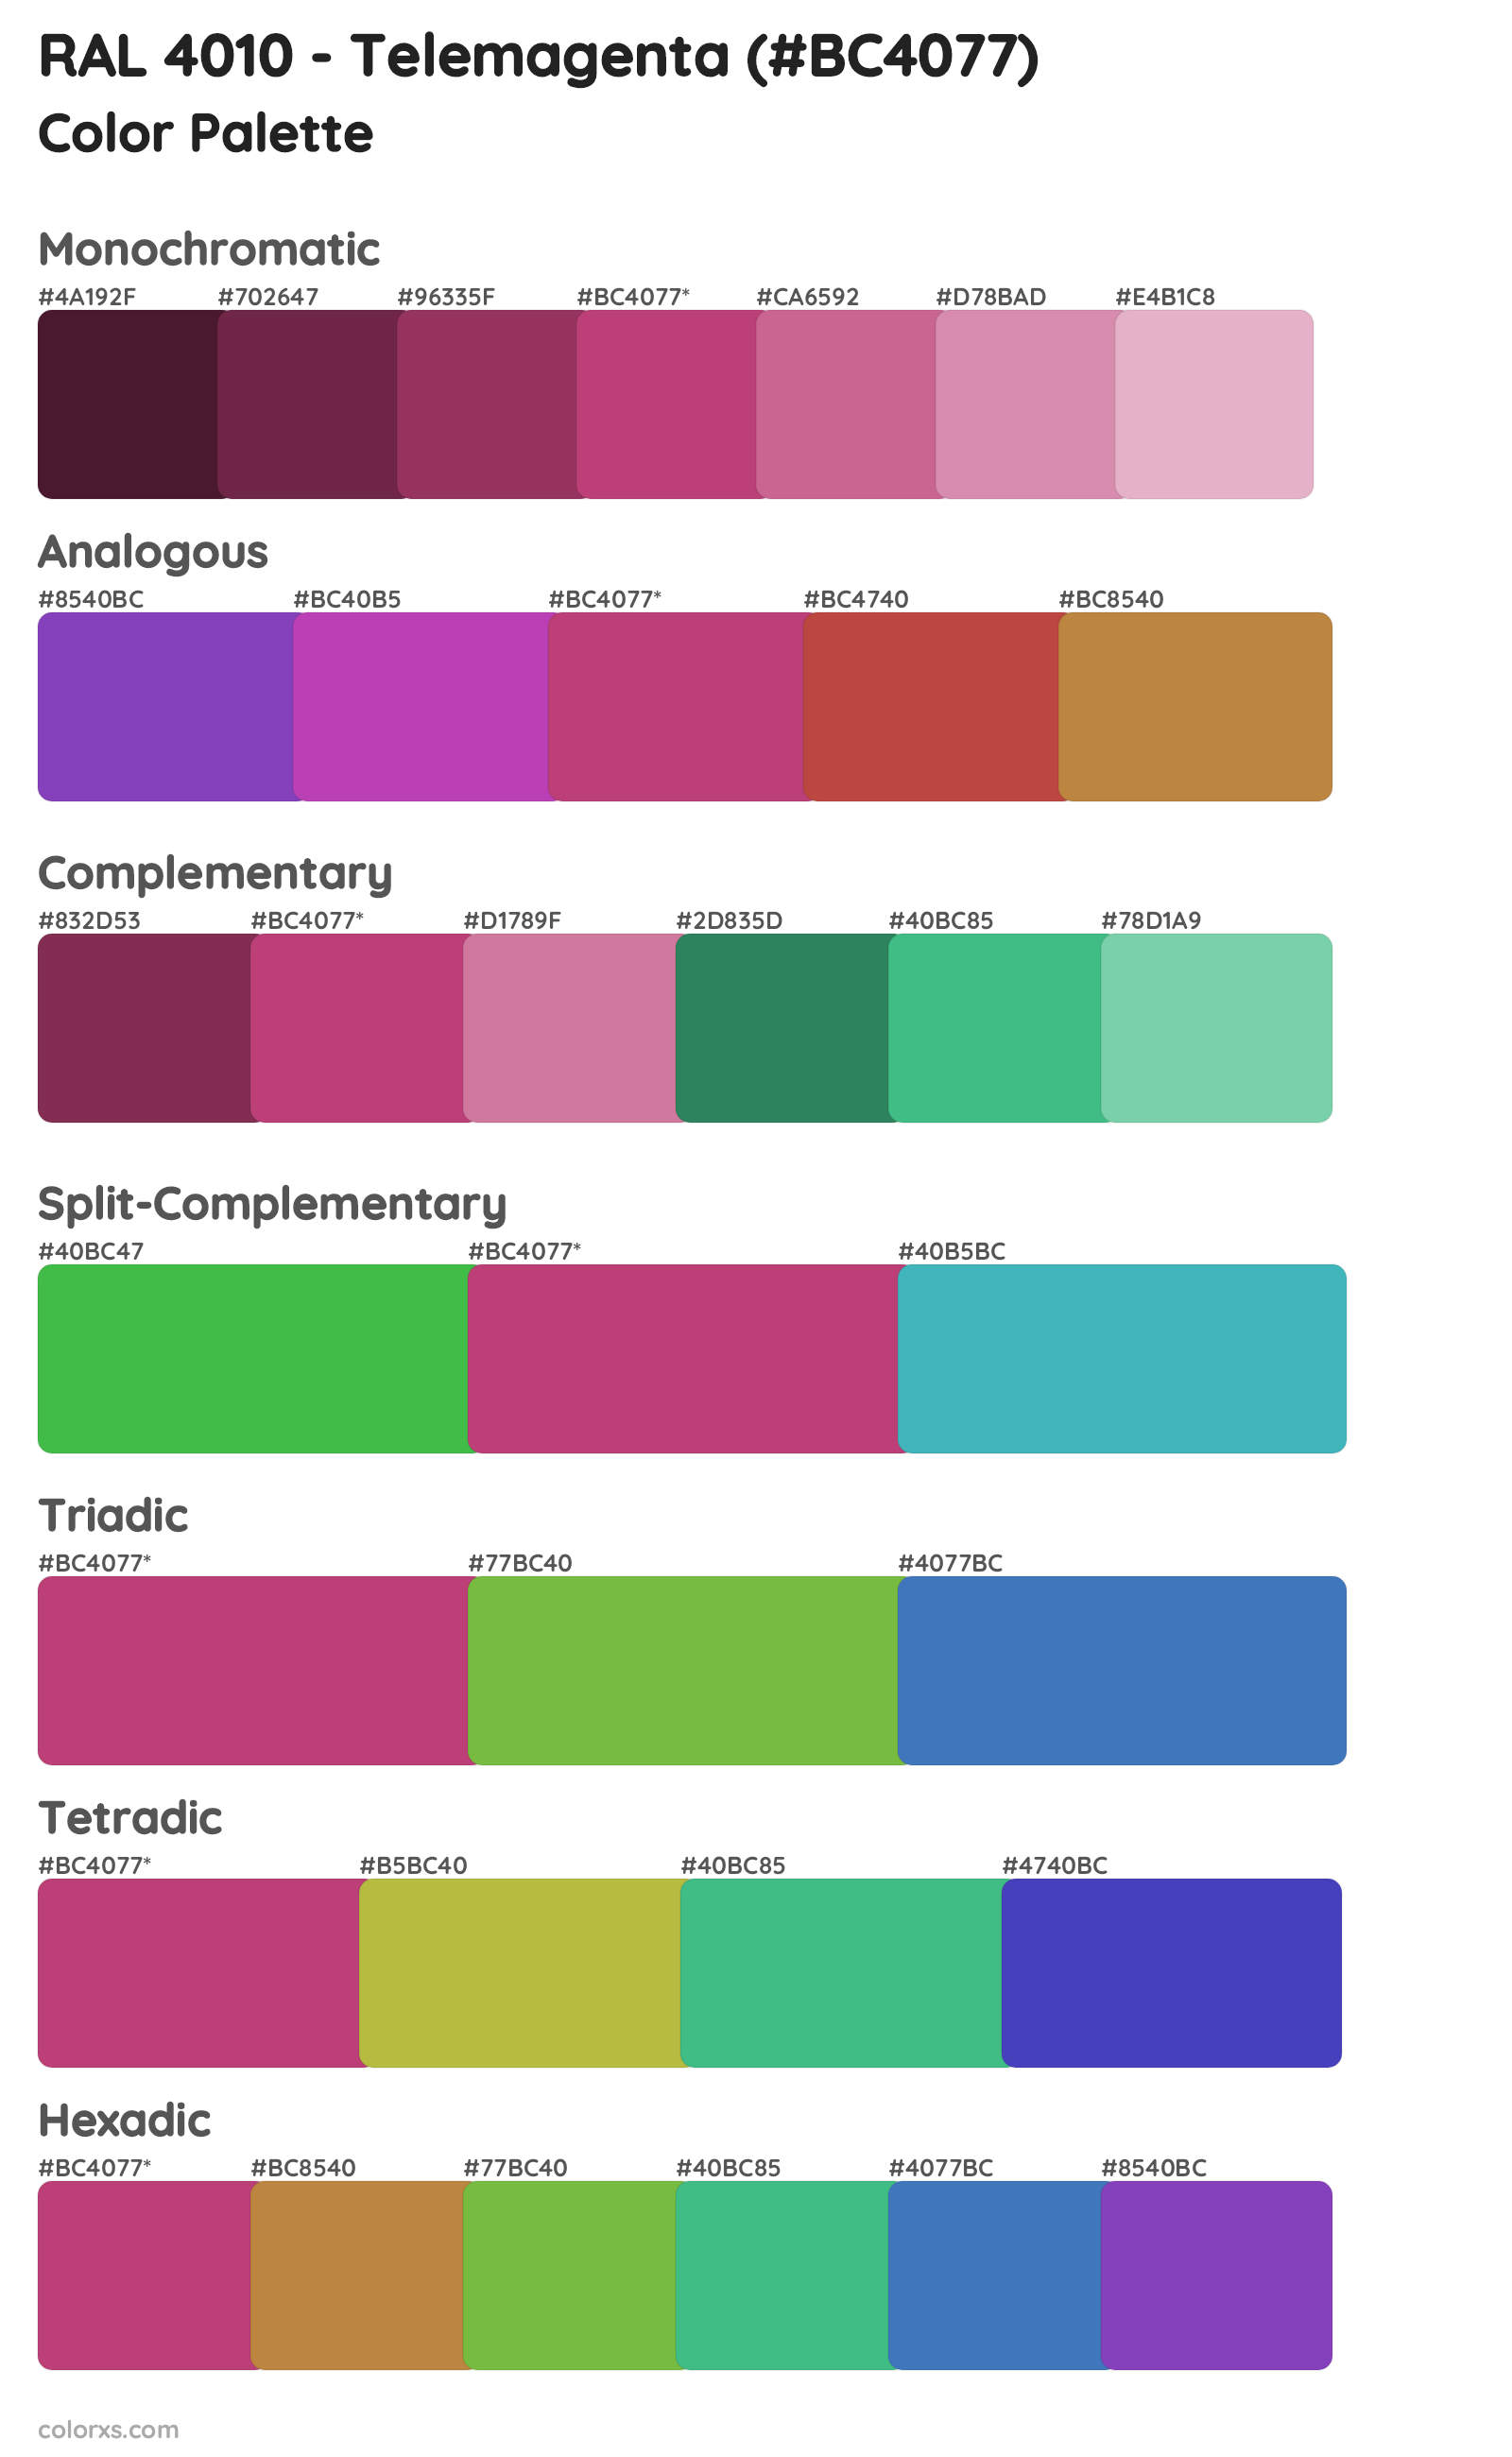 RAL 4010 - Telemagenta Color Scheme Palettes